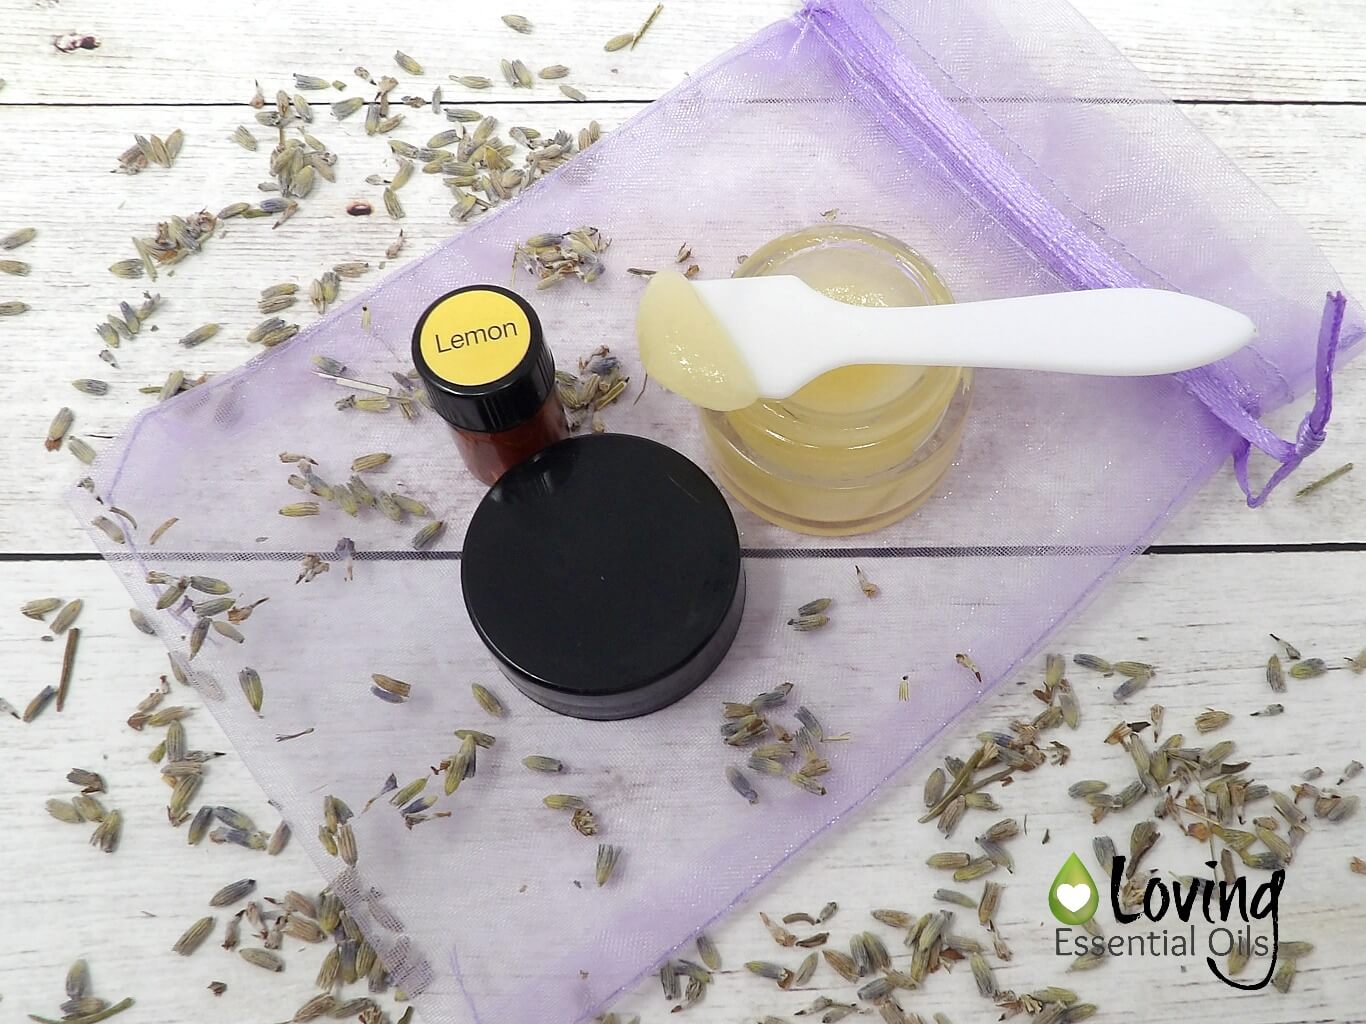 Homemade Sugar Scrub Benefits to Exfoliate Skin by Loving Essential Oils